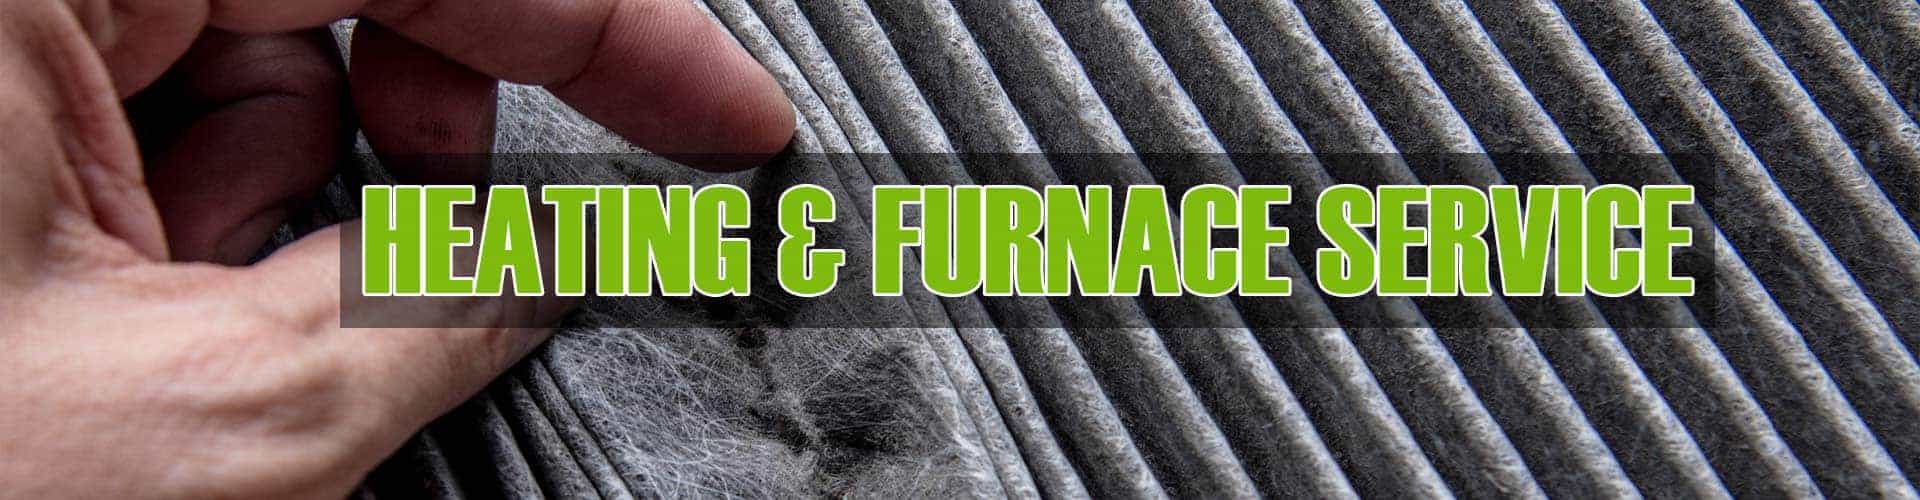 Heating Service & Furnace Service Elgin, Illinois Heating Repair Company